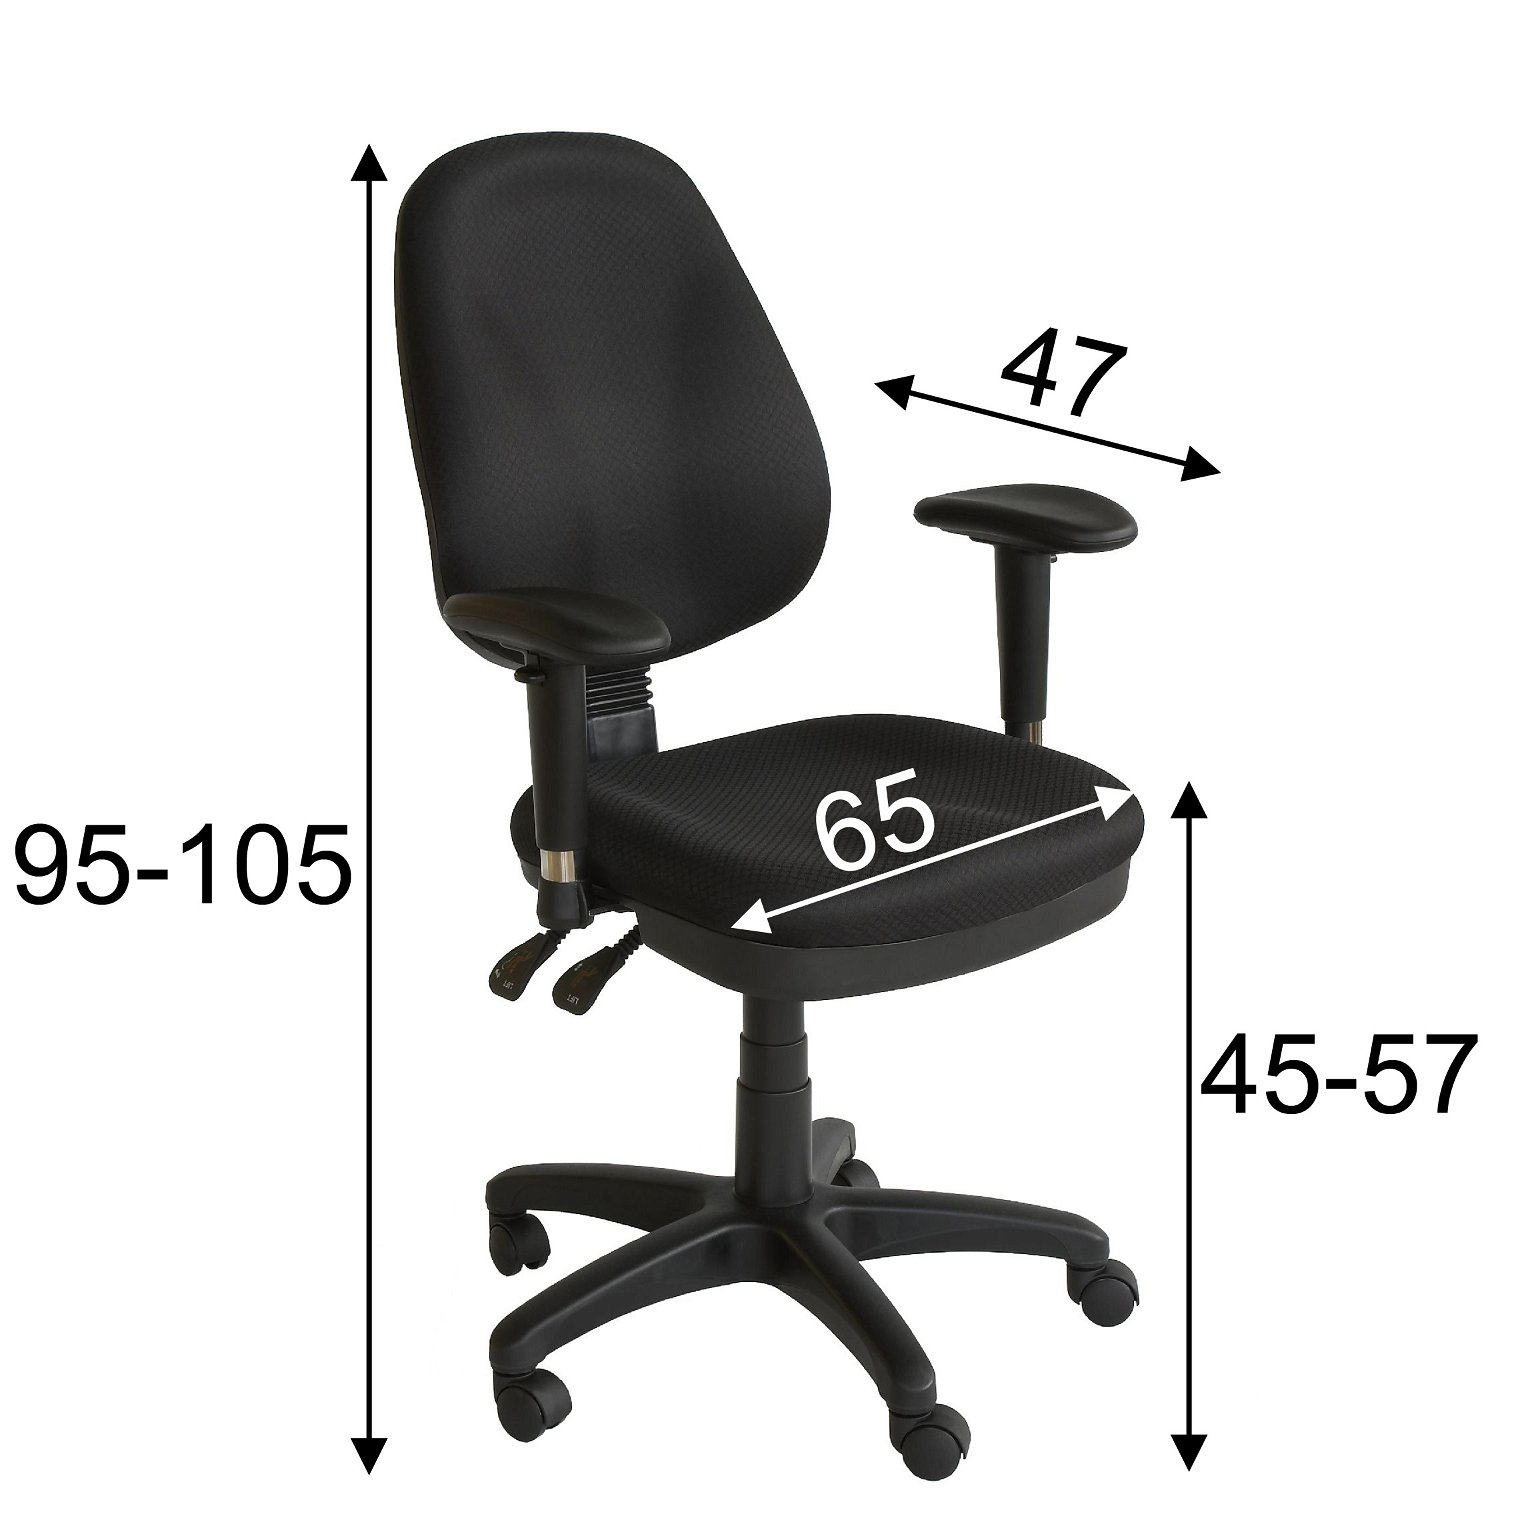 Biuro kėdė 421FGA-LUX, 65x47x96-106 cm, juoda - 2